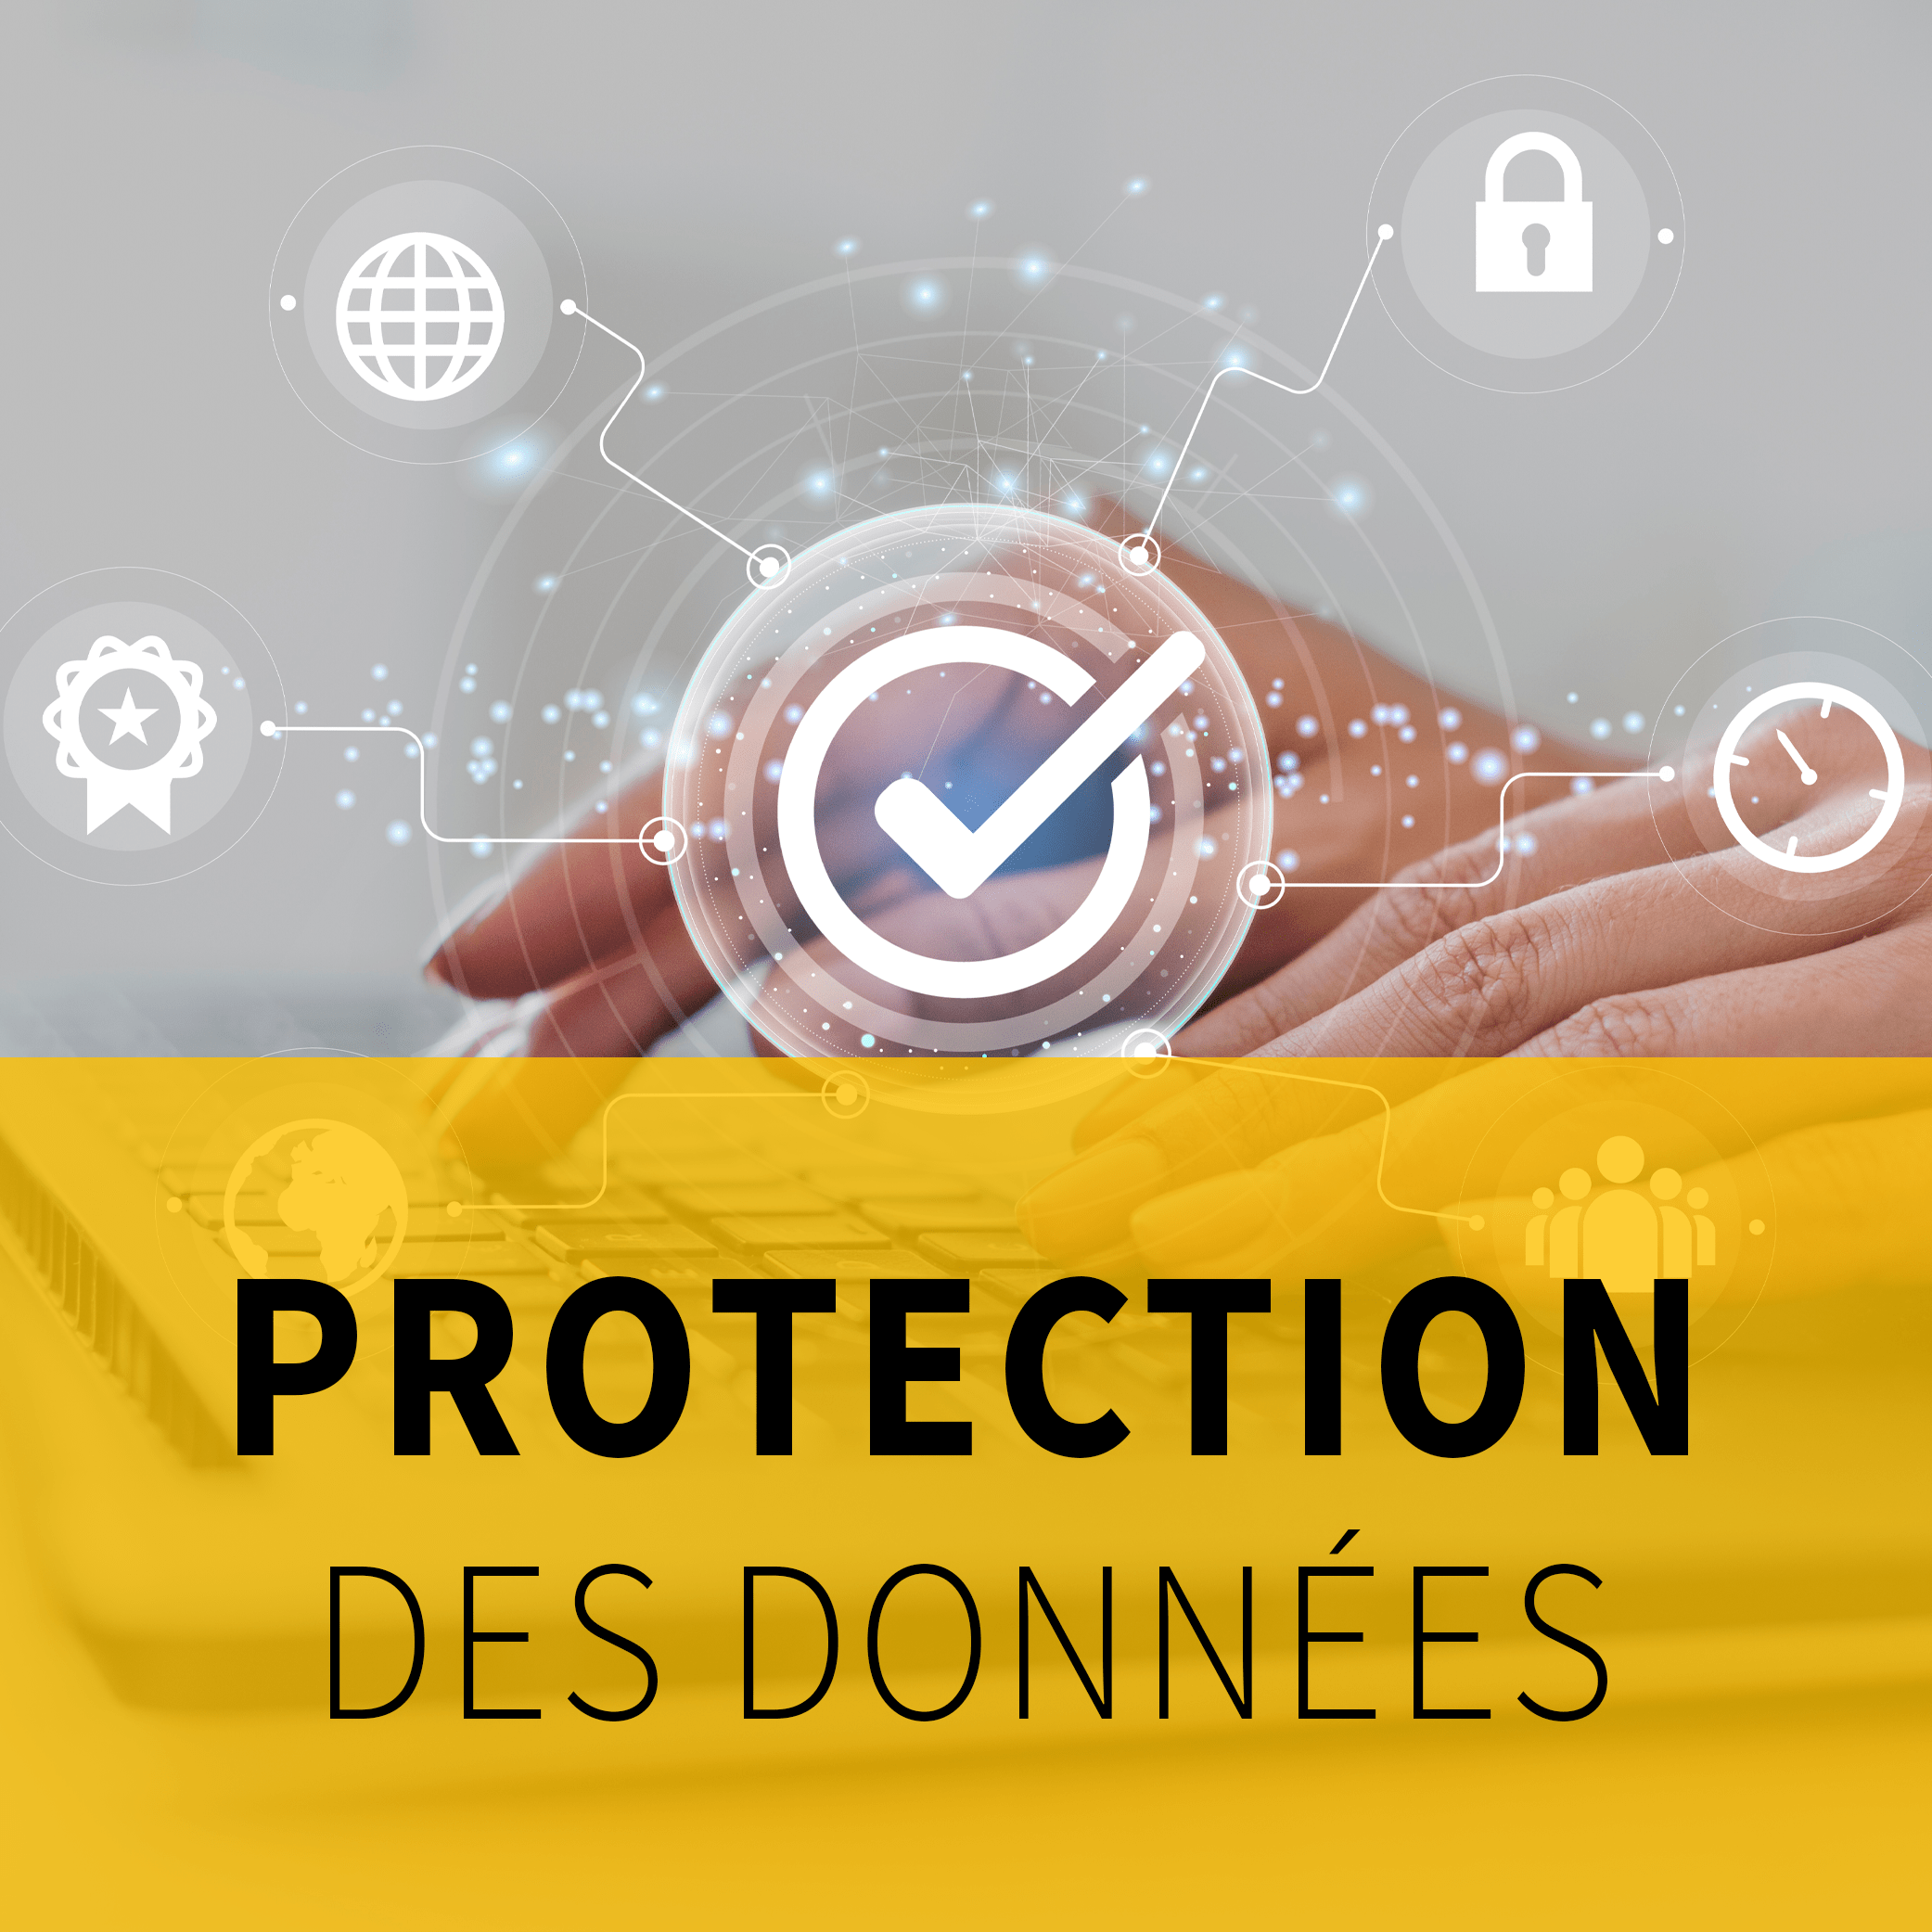 protection_des_donnees-min.png